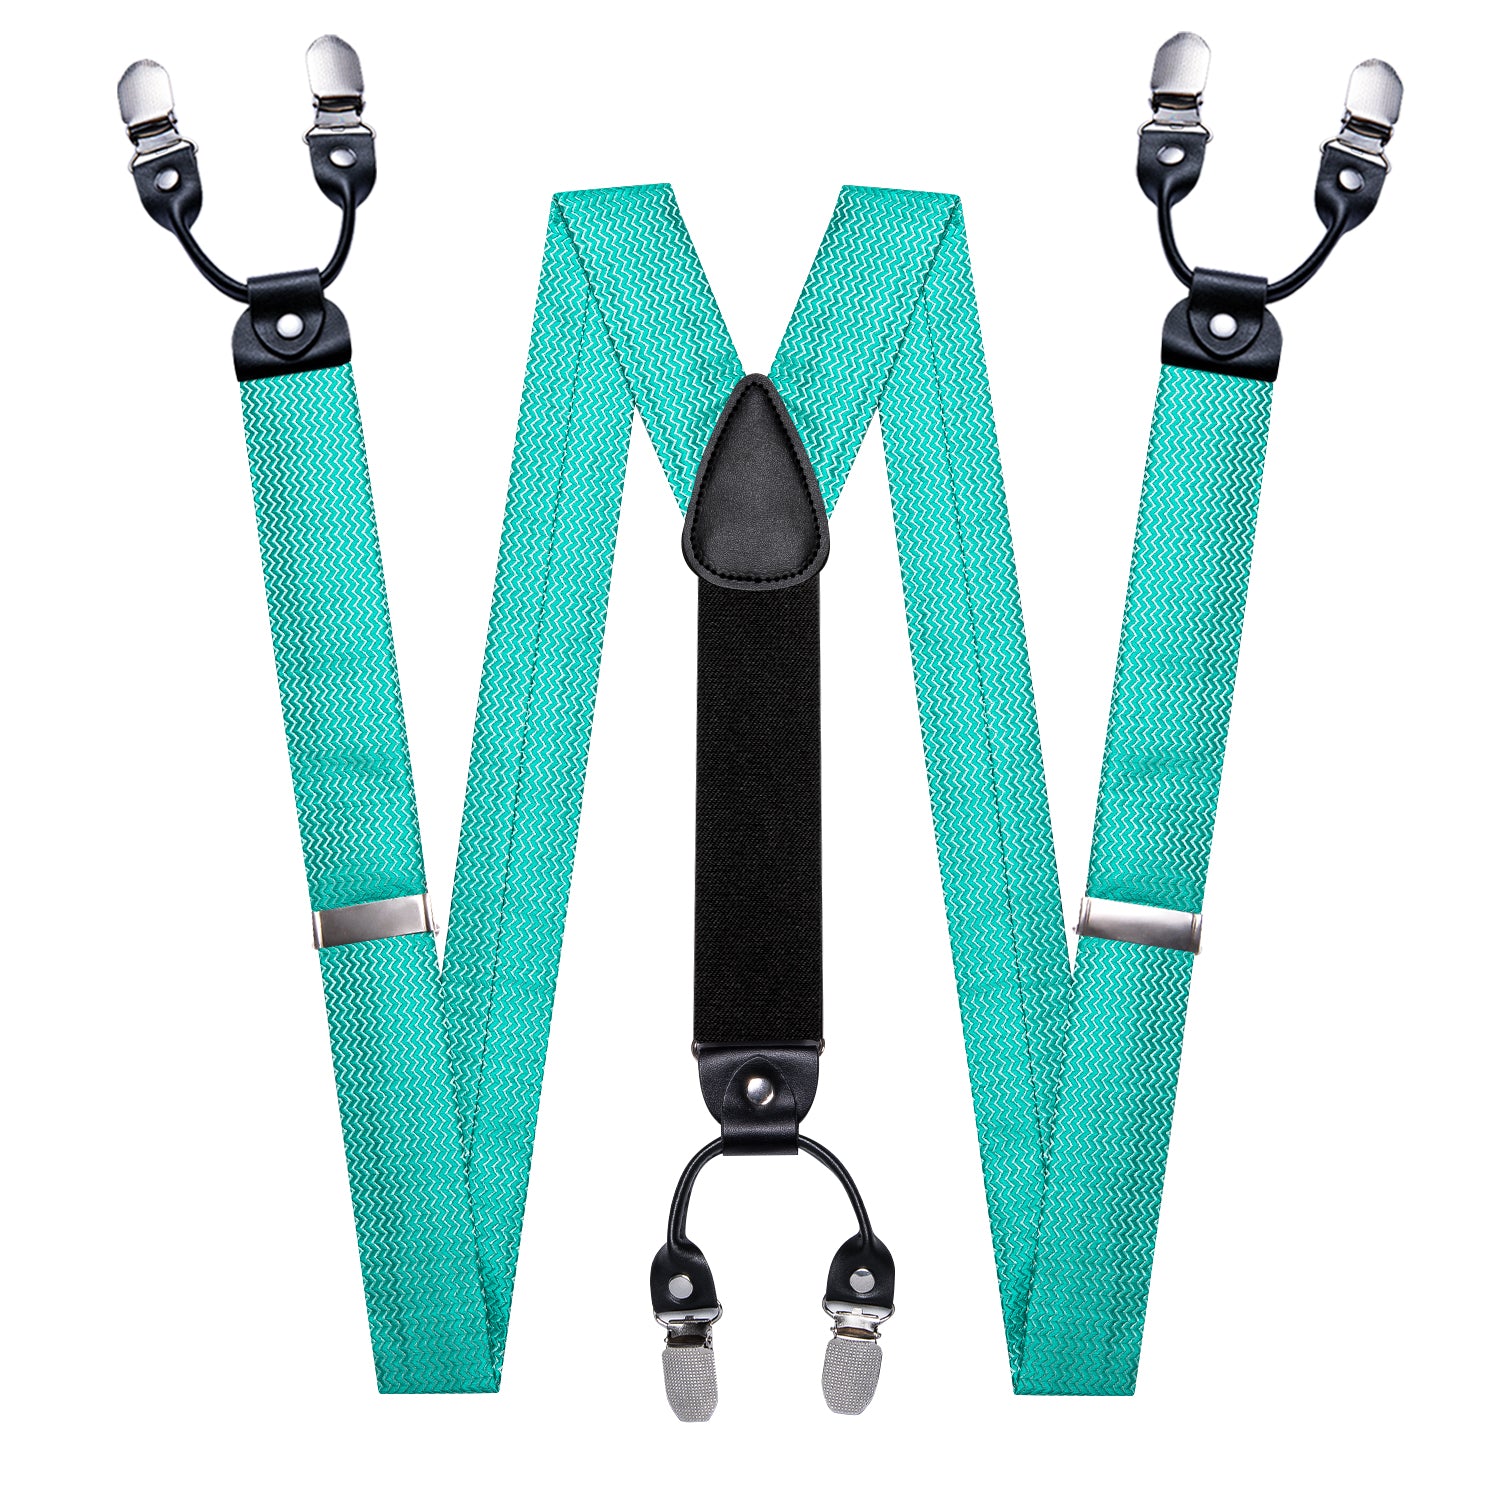 Barry.wang Men's Suspenders Turquoise Solid Y Back Adjustable Bow Tie Suspenders Set